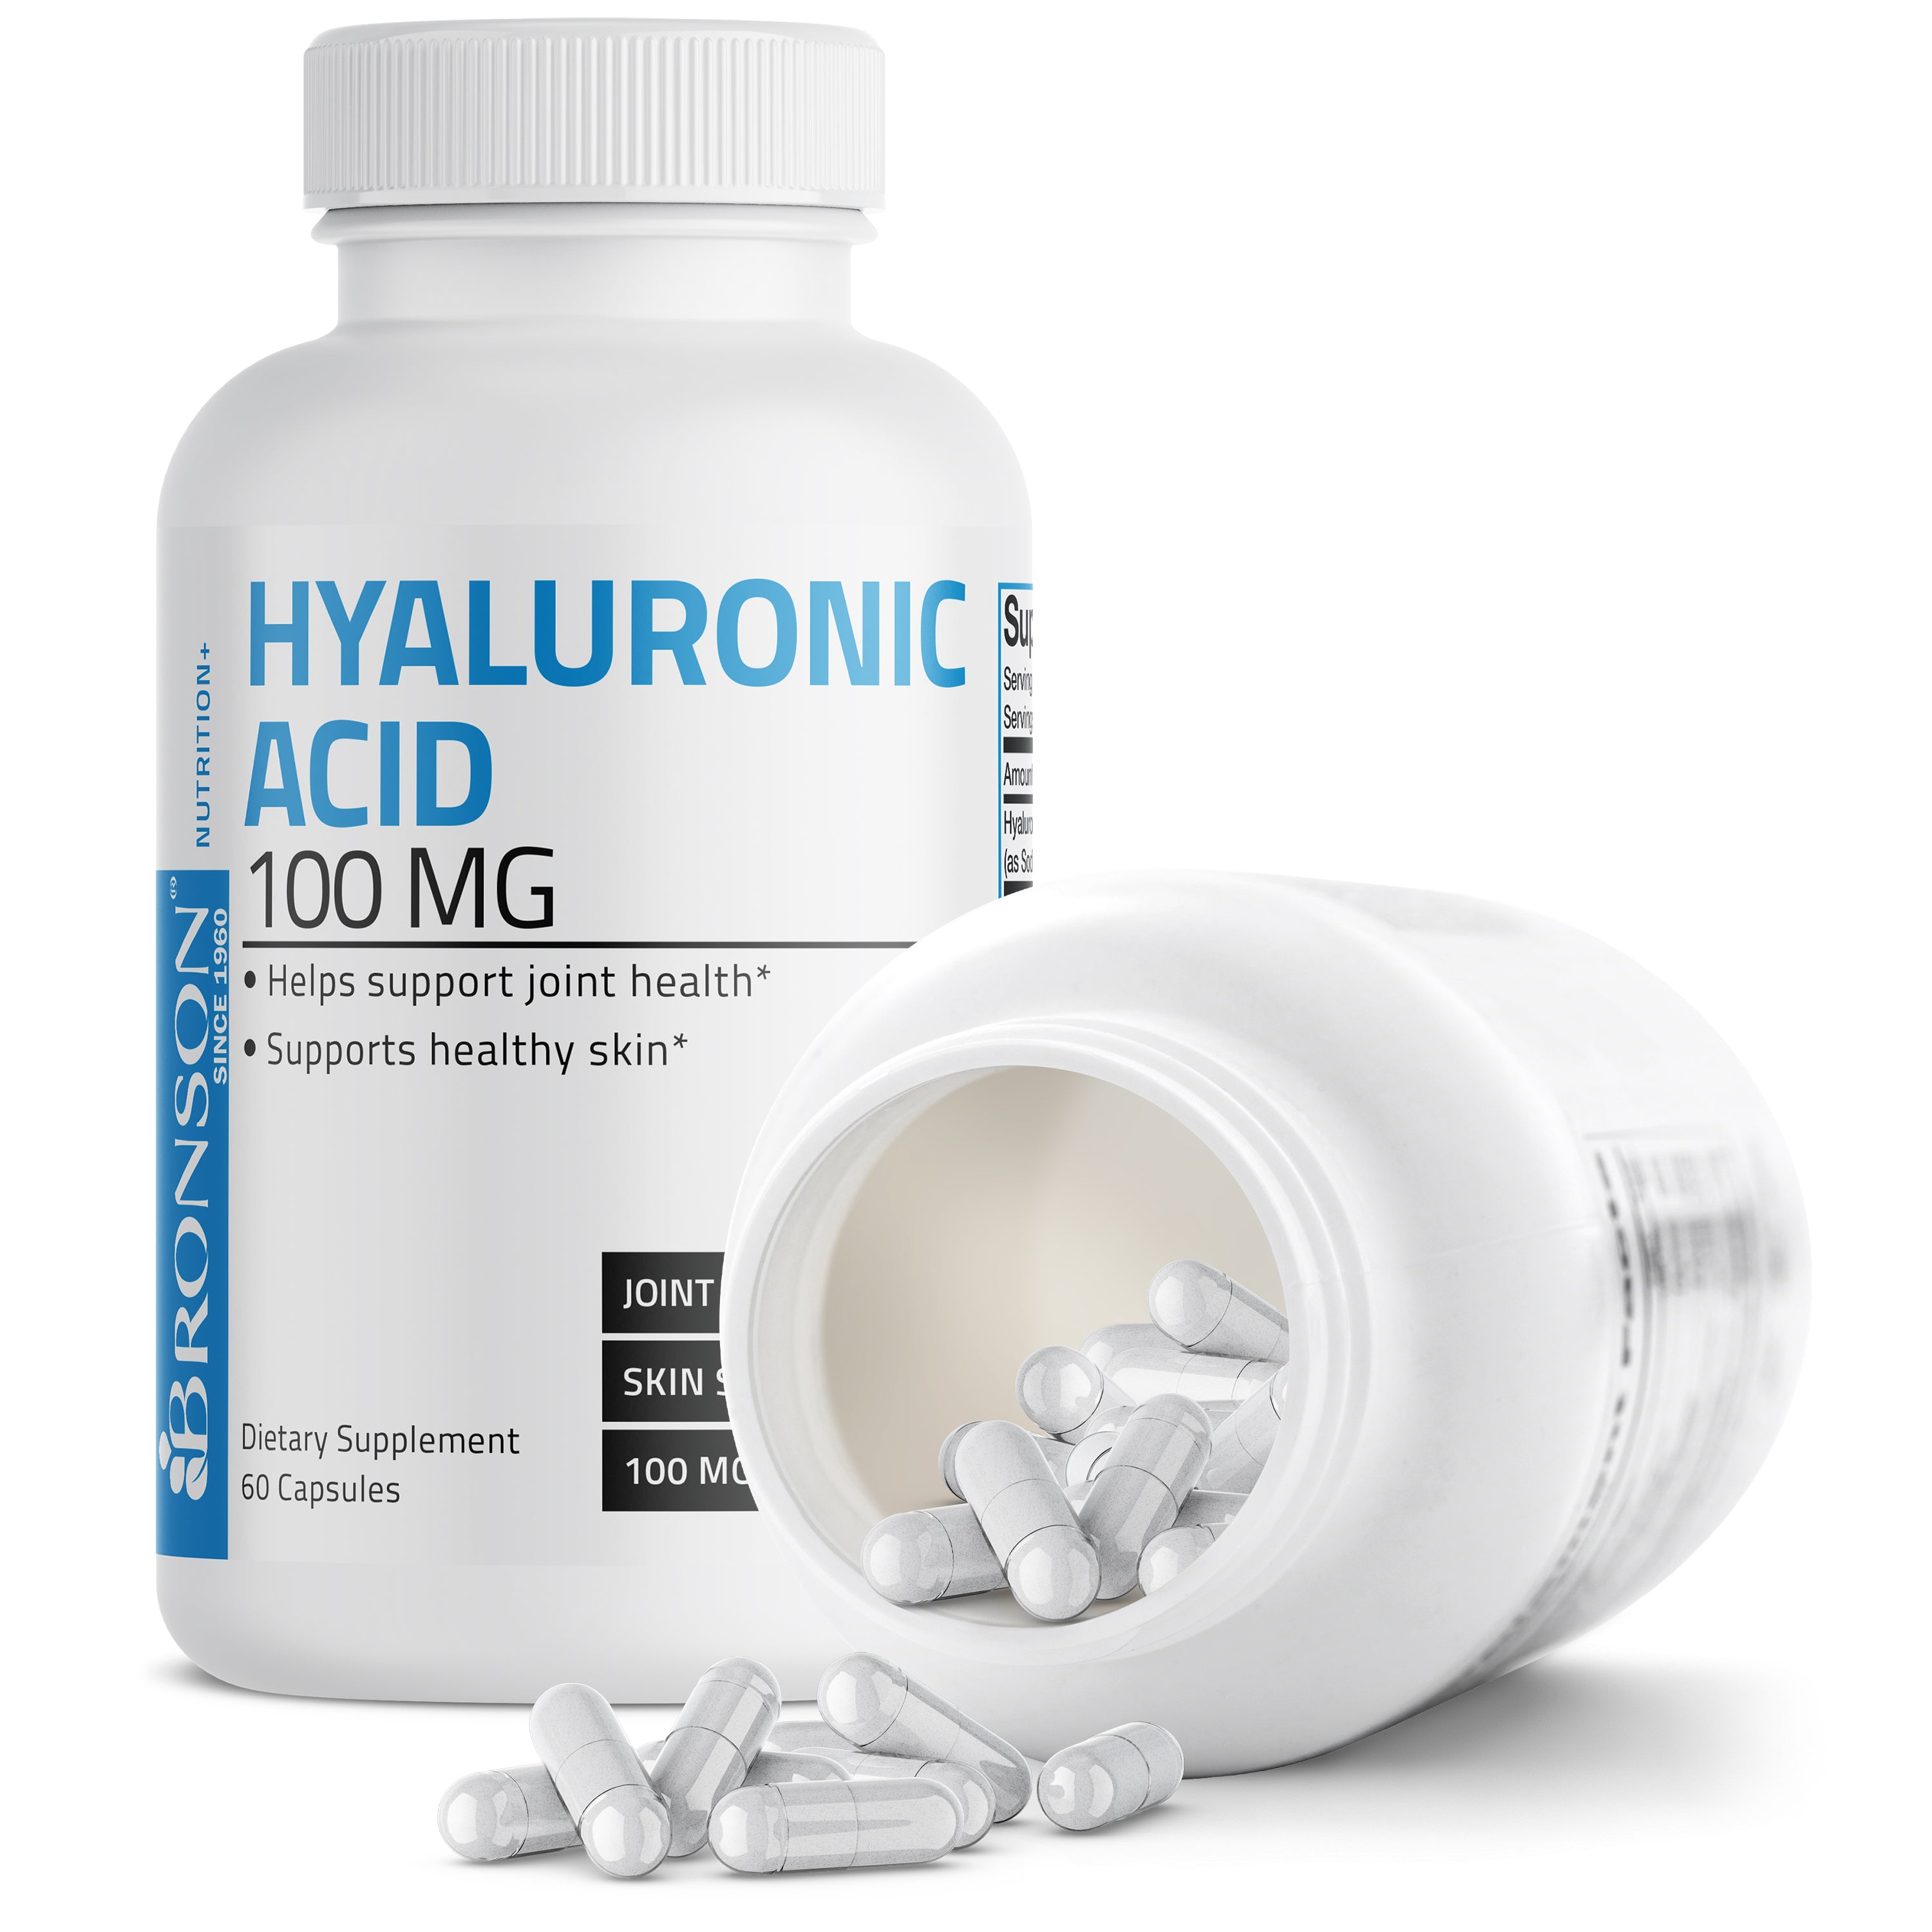 Hyaluronic Acid - 100 mg (Per 2 Capsules) view 4 of 6